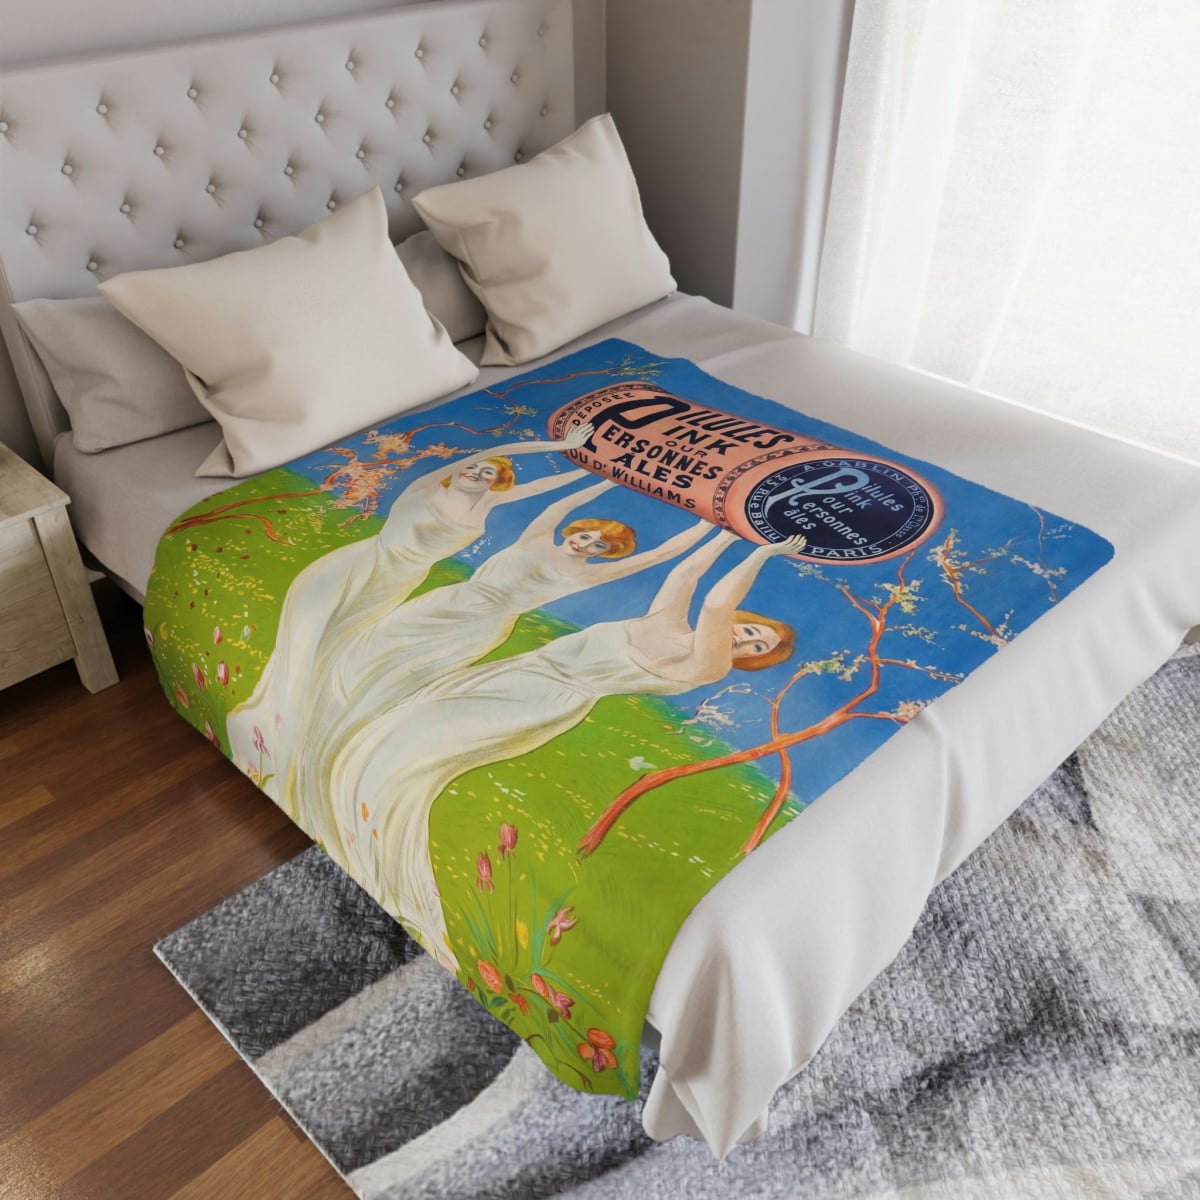 Retro Style Art Blanket for Stylish Home Decor